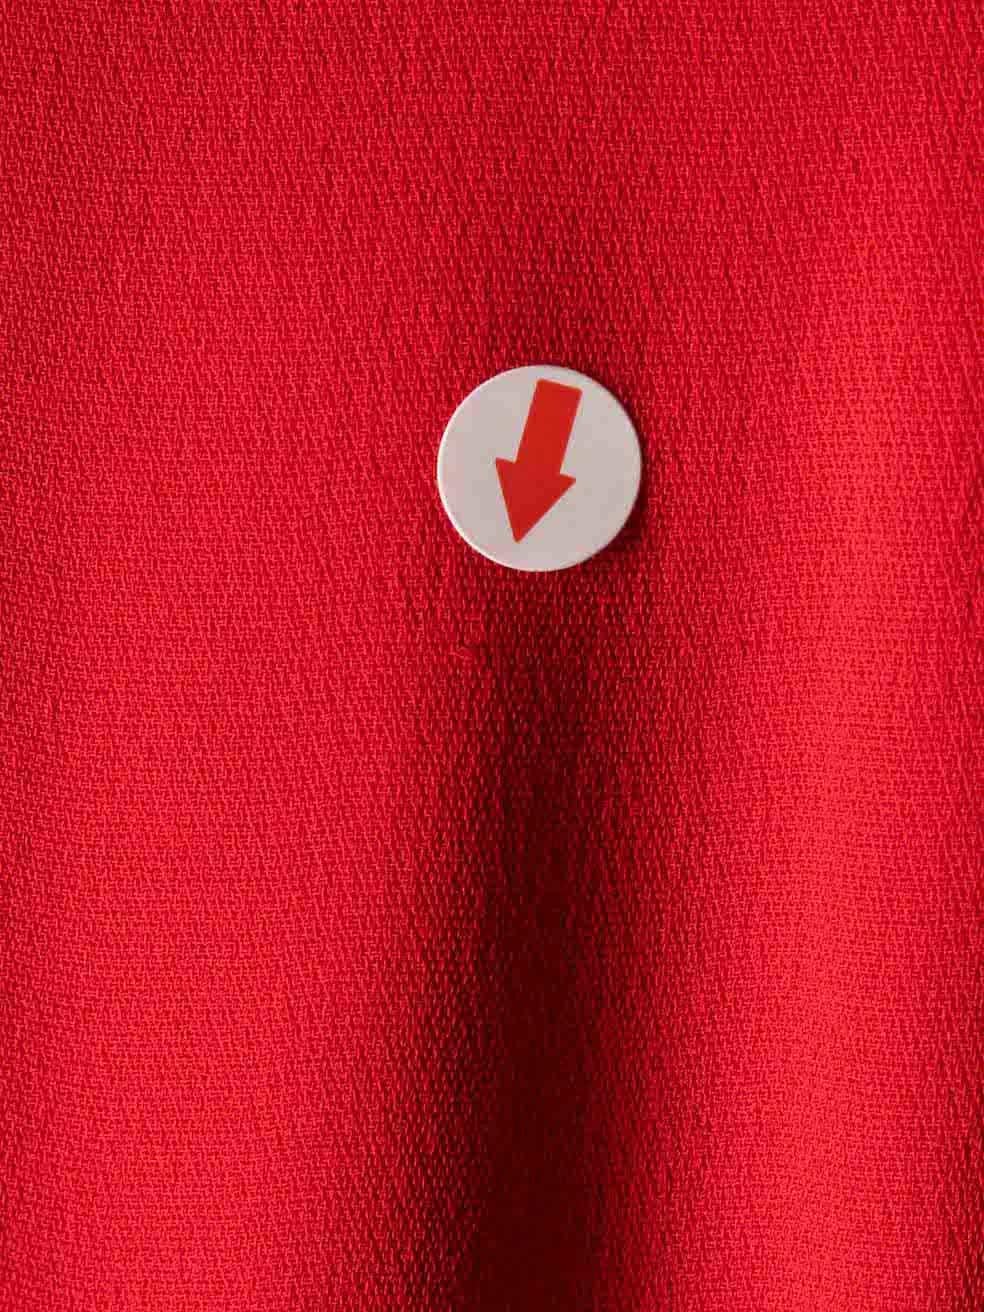 Valentino Garavani Red Silk Sleeveless Cape Detail Gown Size M For Sale 2